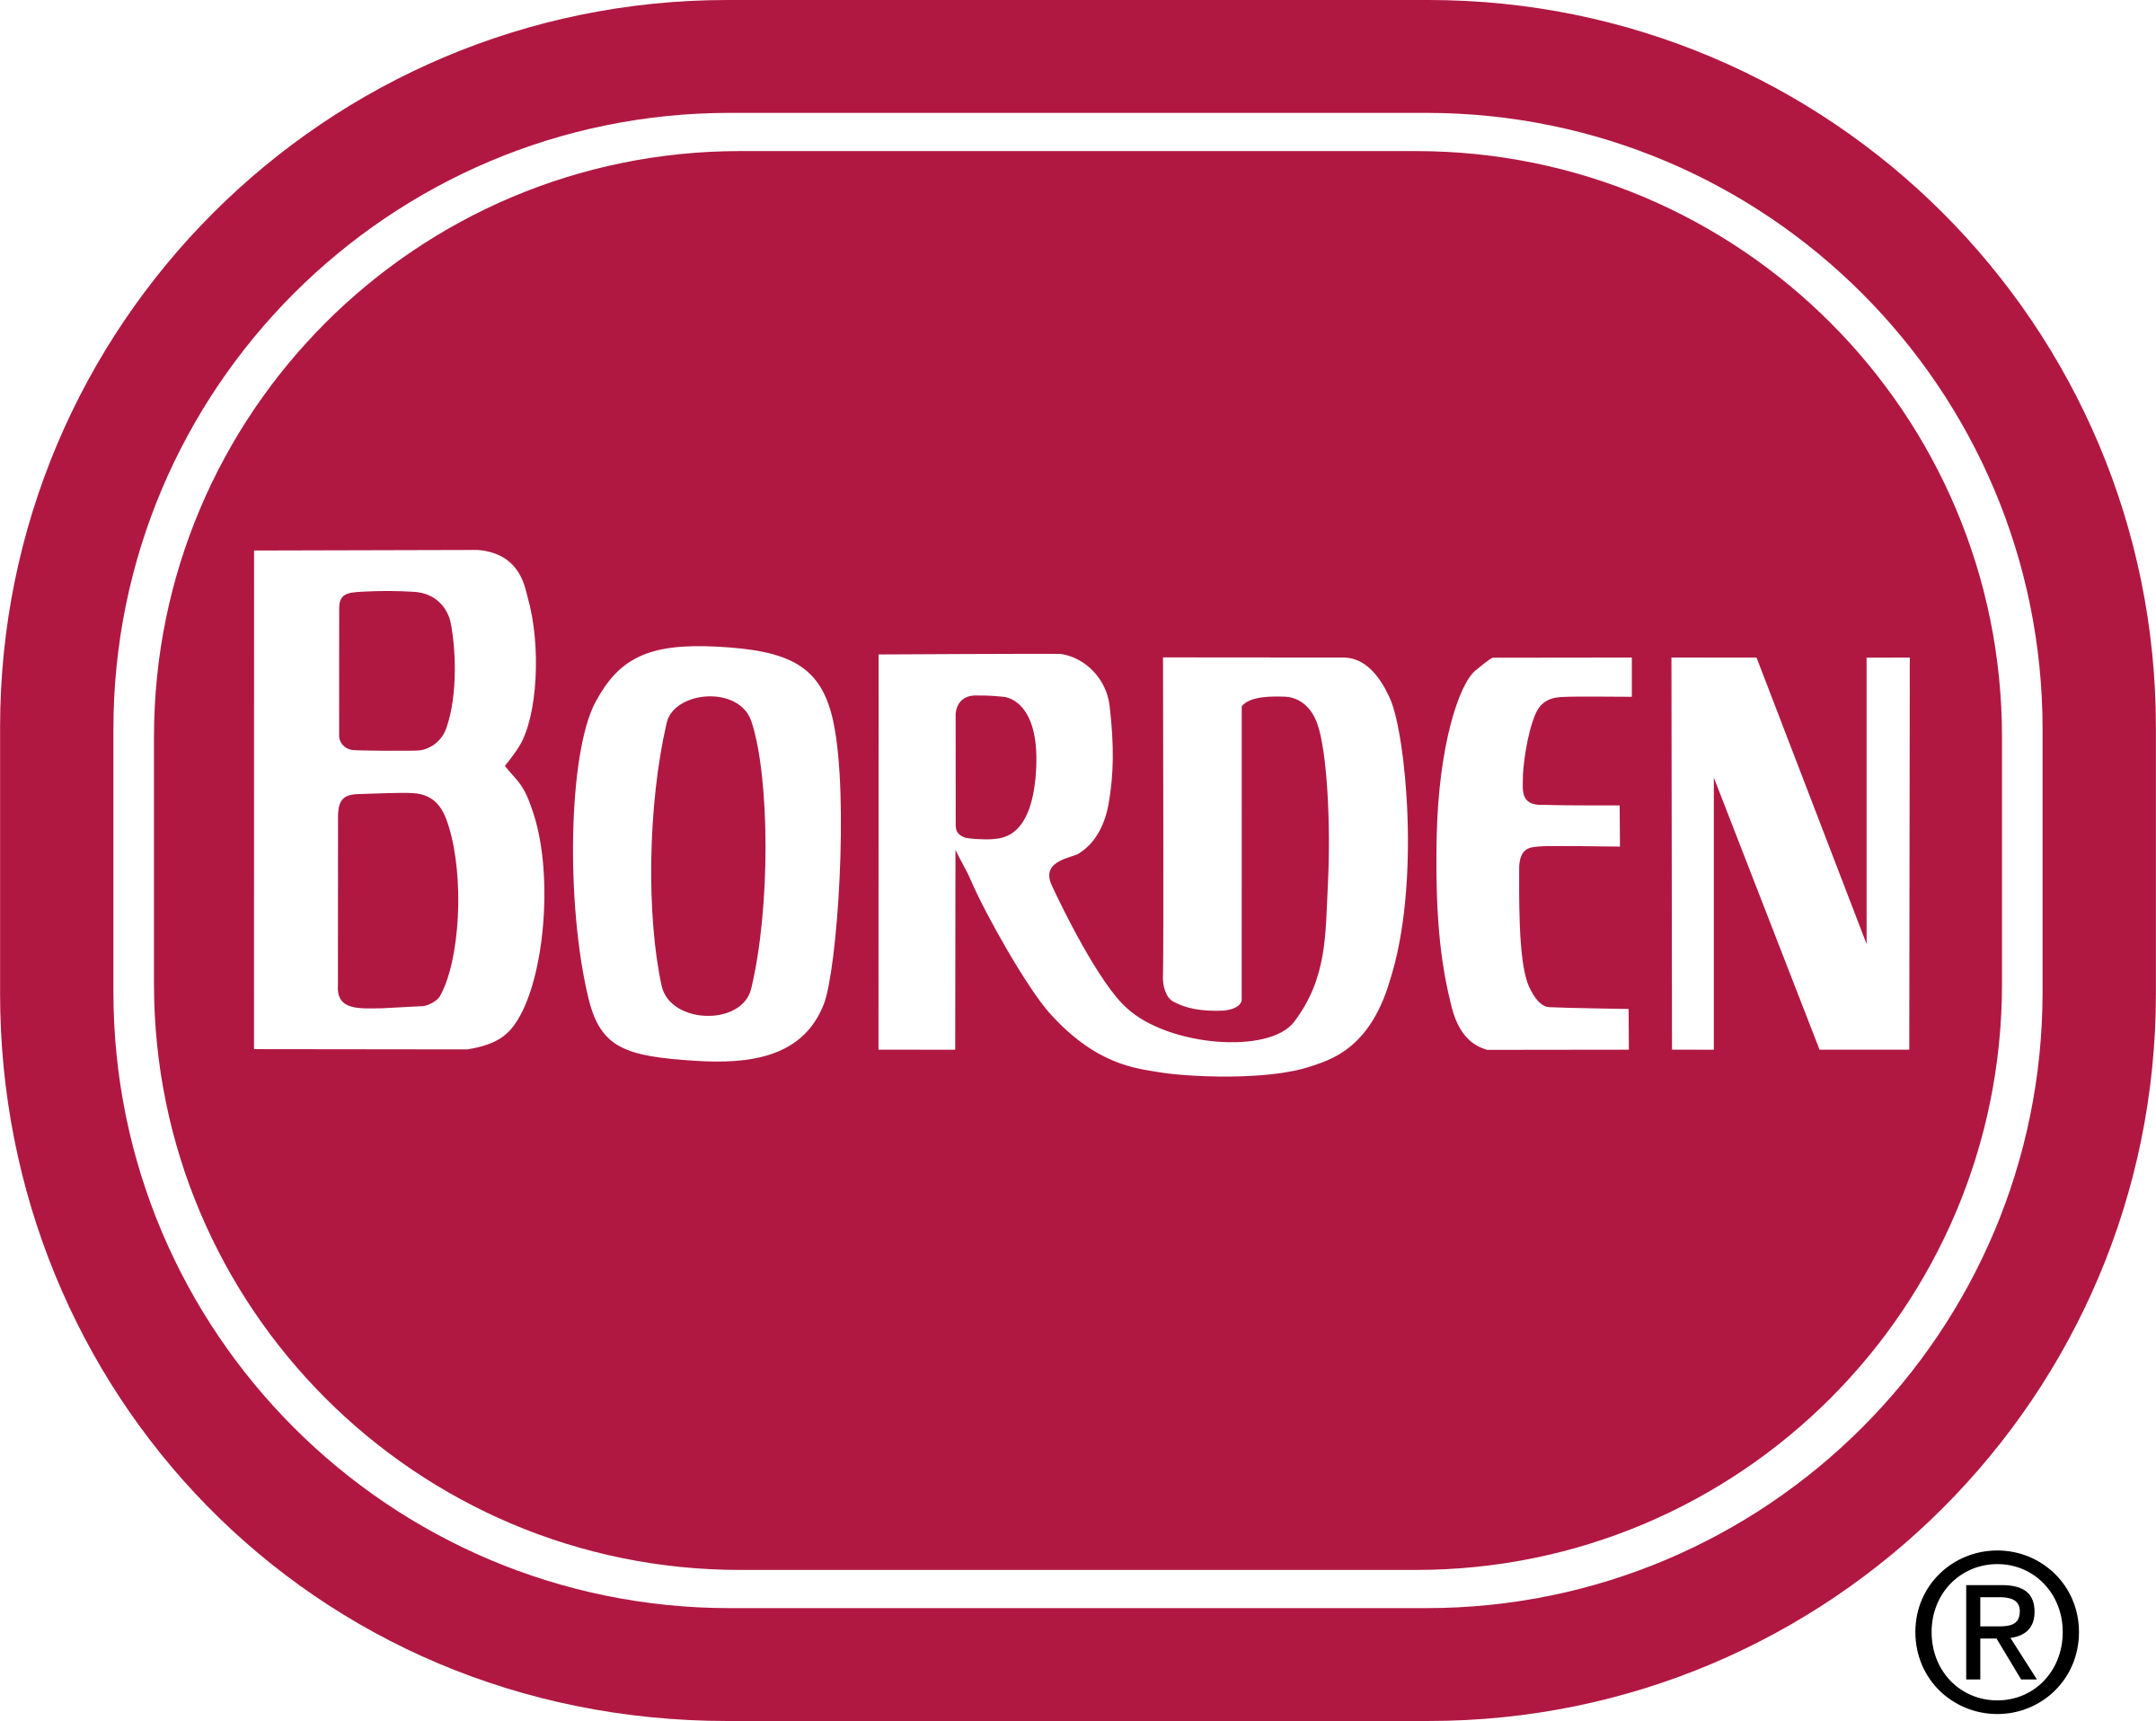 Borden Logo - Borden Foods Logo PNG Transparent & SVG Vector - Freebie Supply